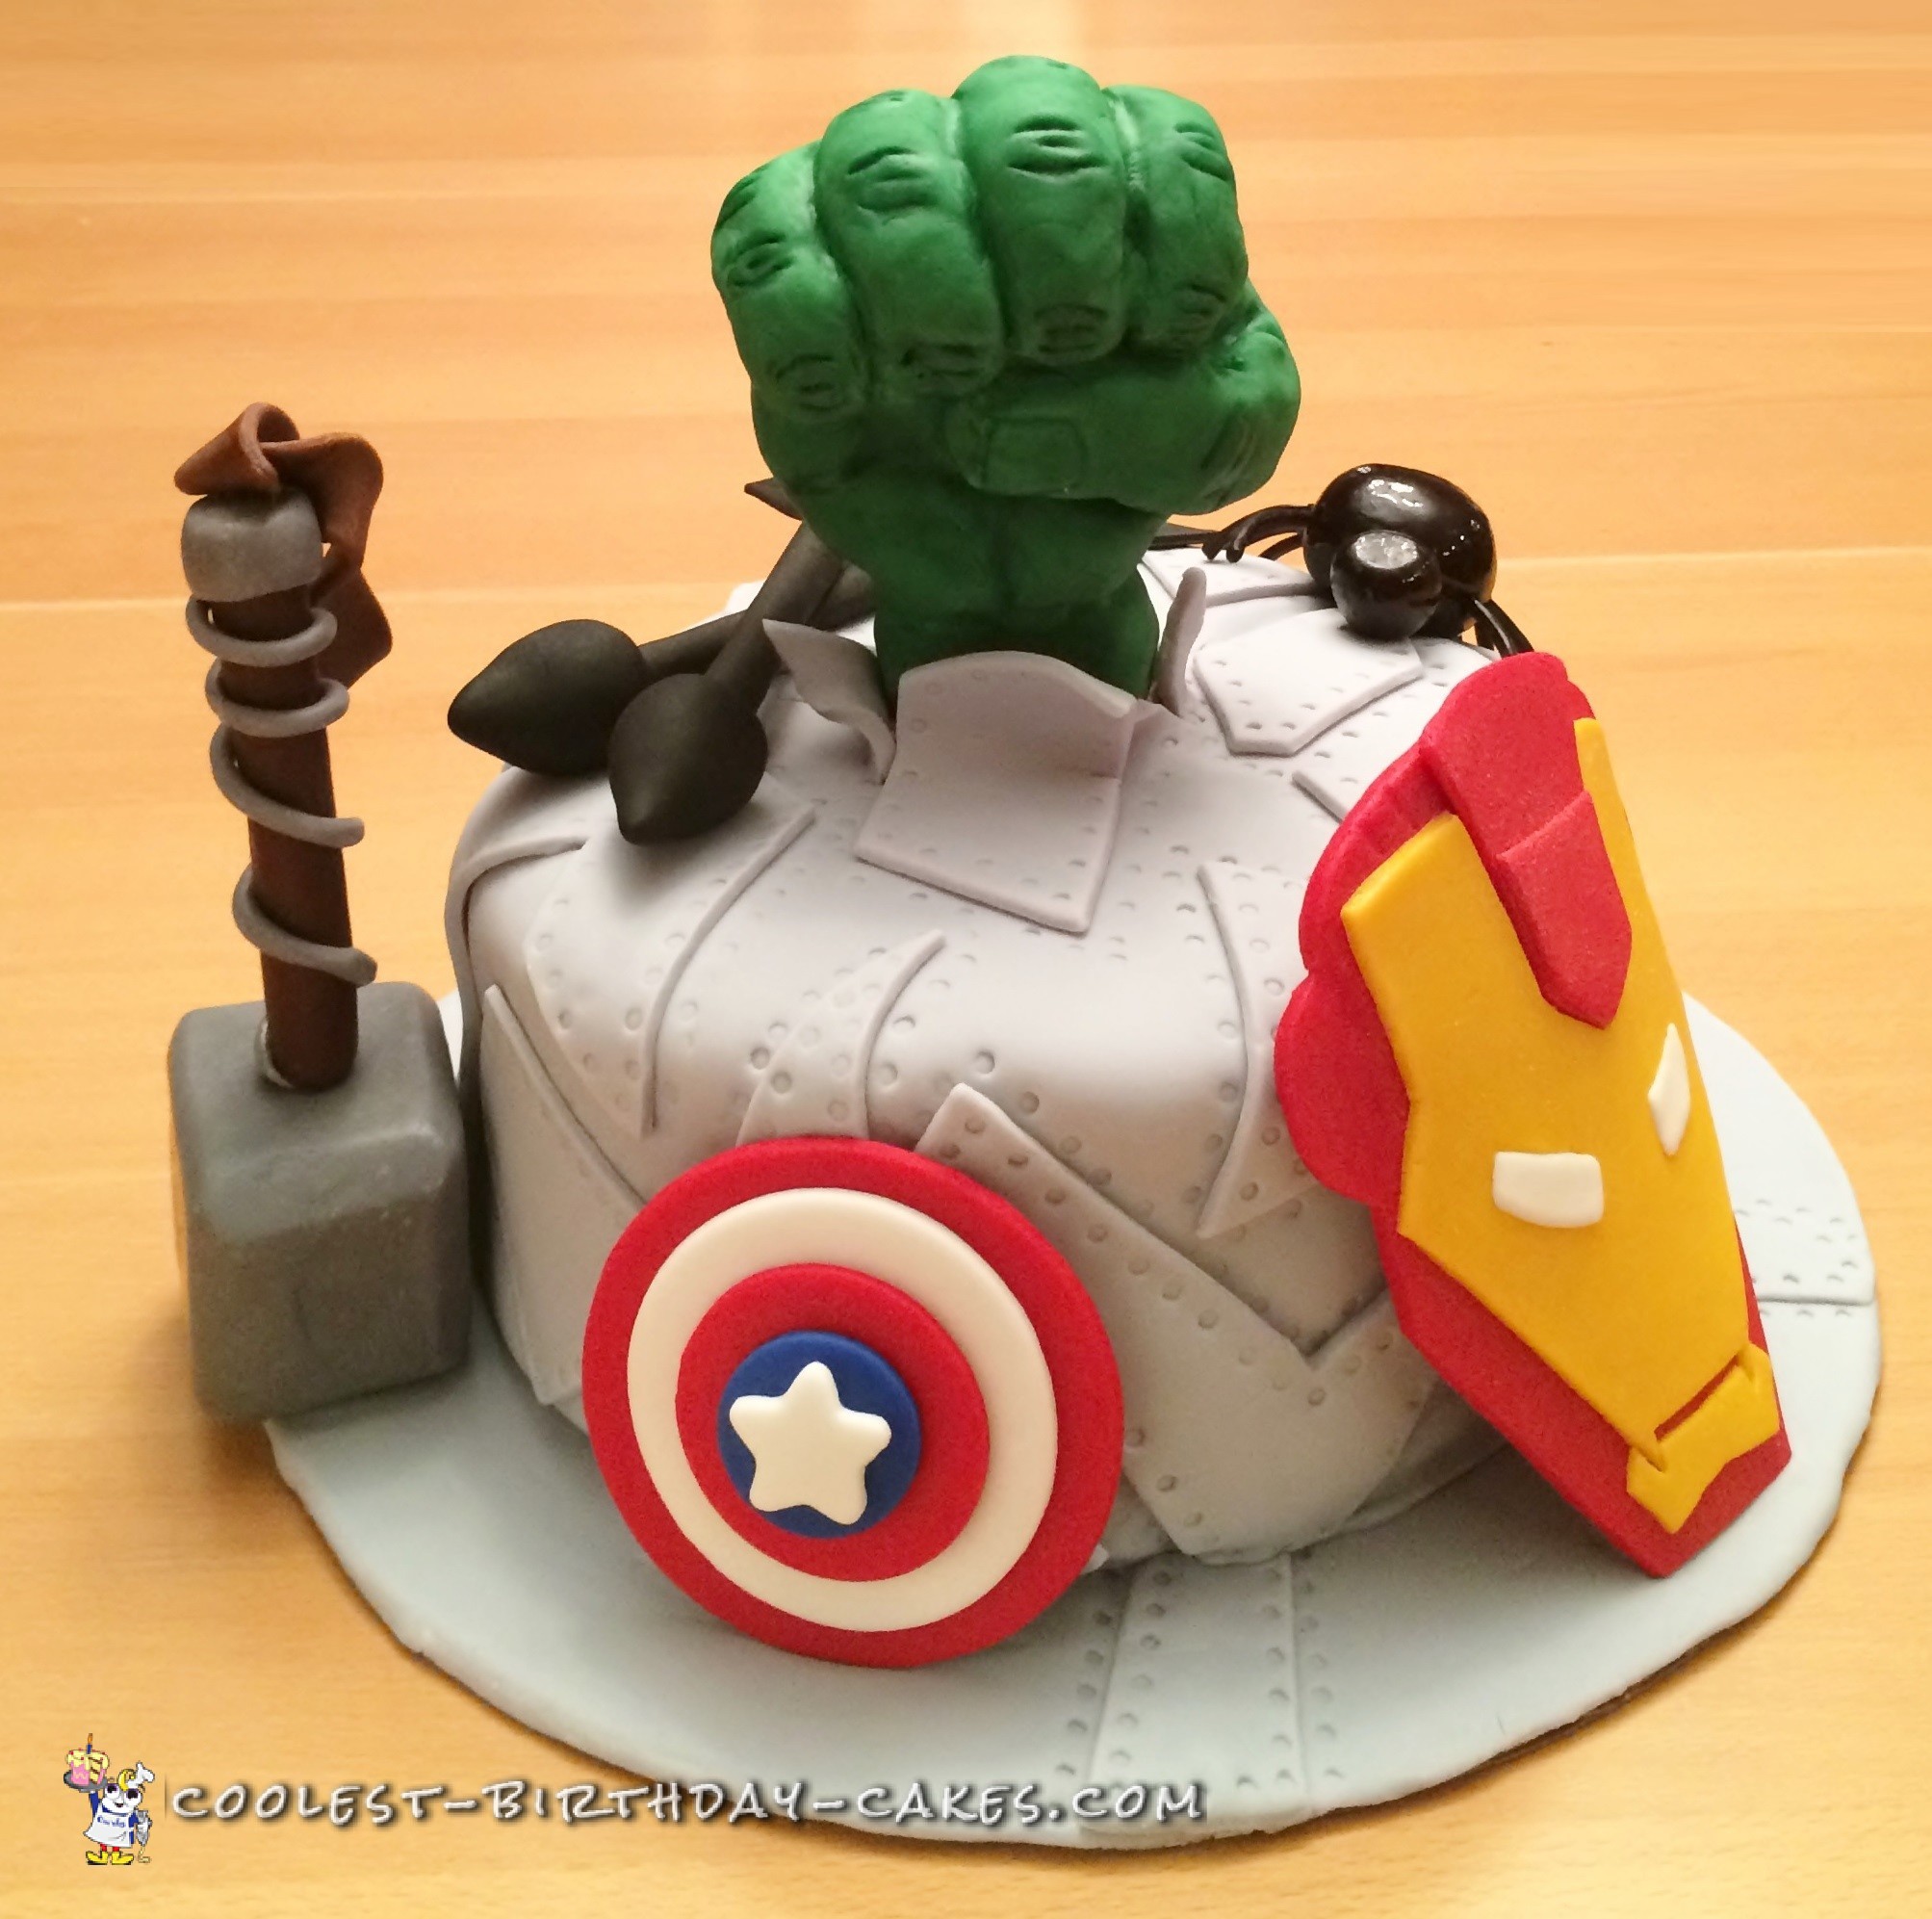 Coolest Ever Avengers Birthday Cake